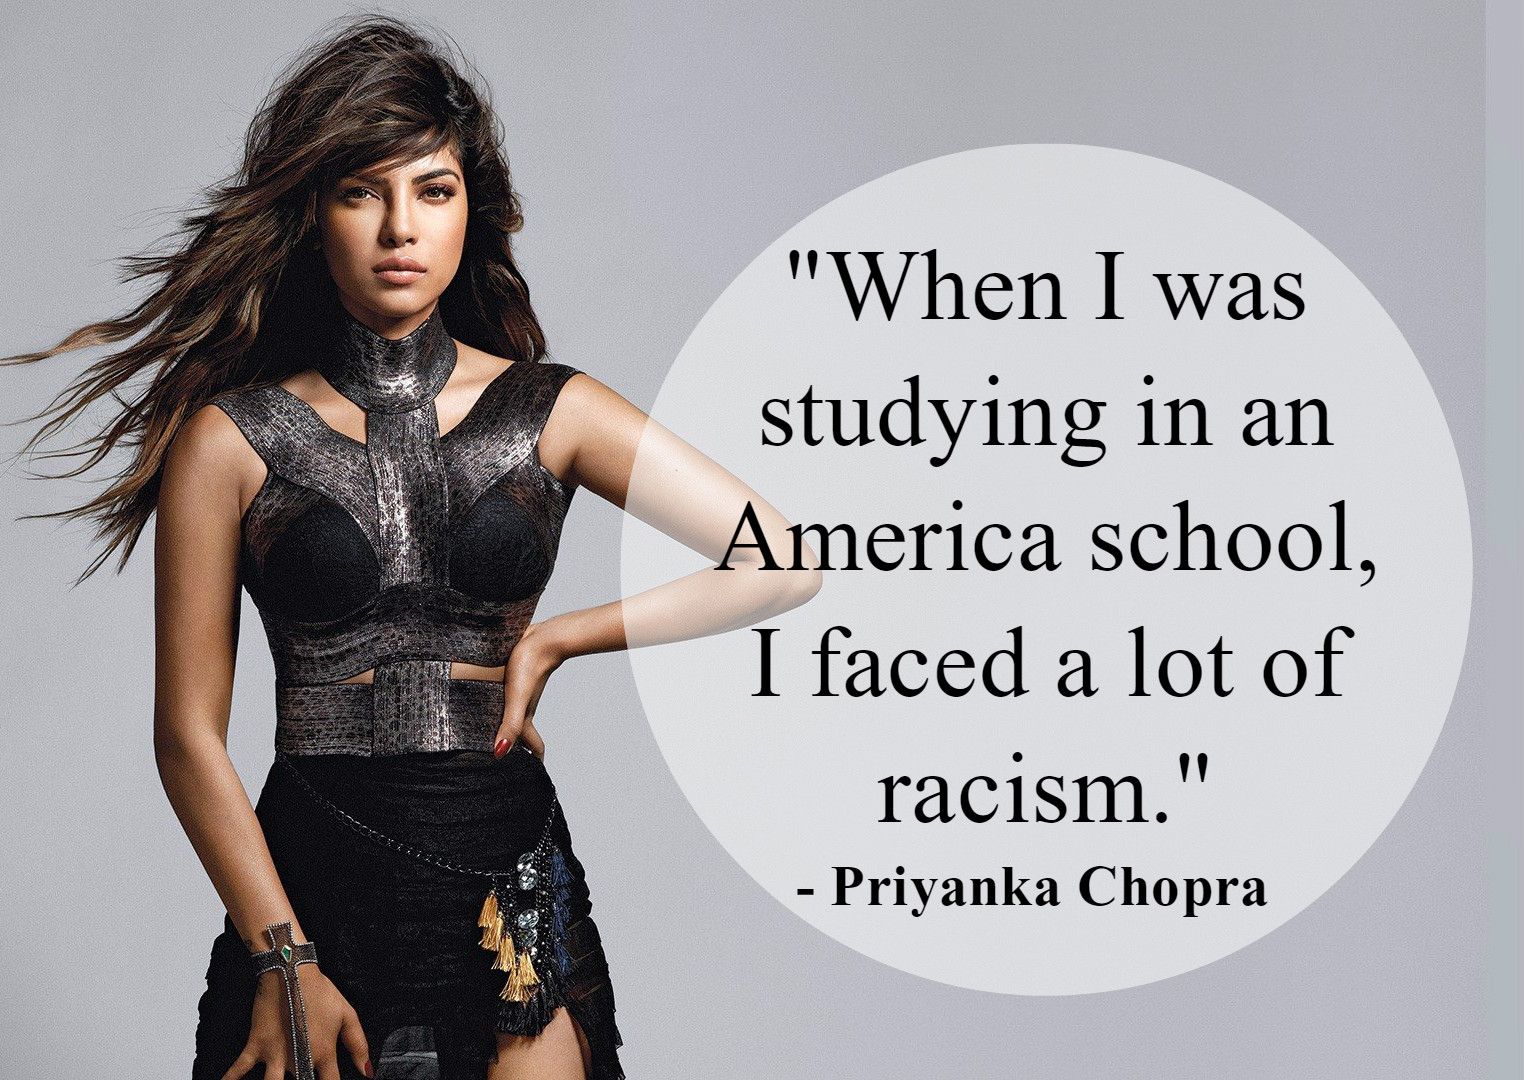 Priyanka Chopra Opened Up About Facing Racism in America